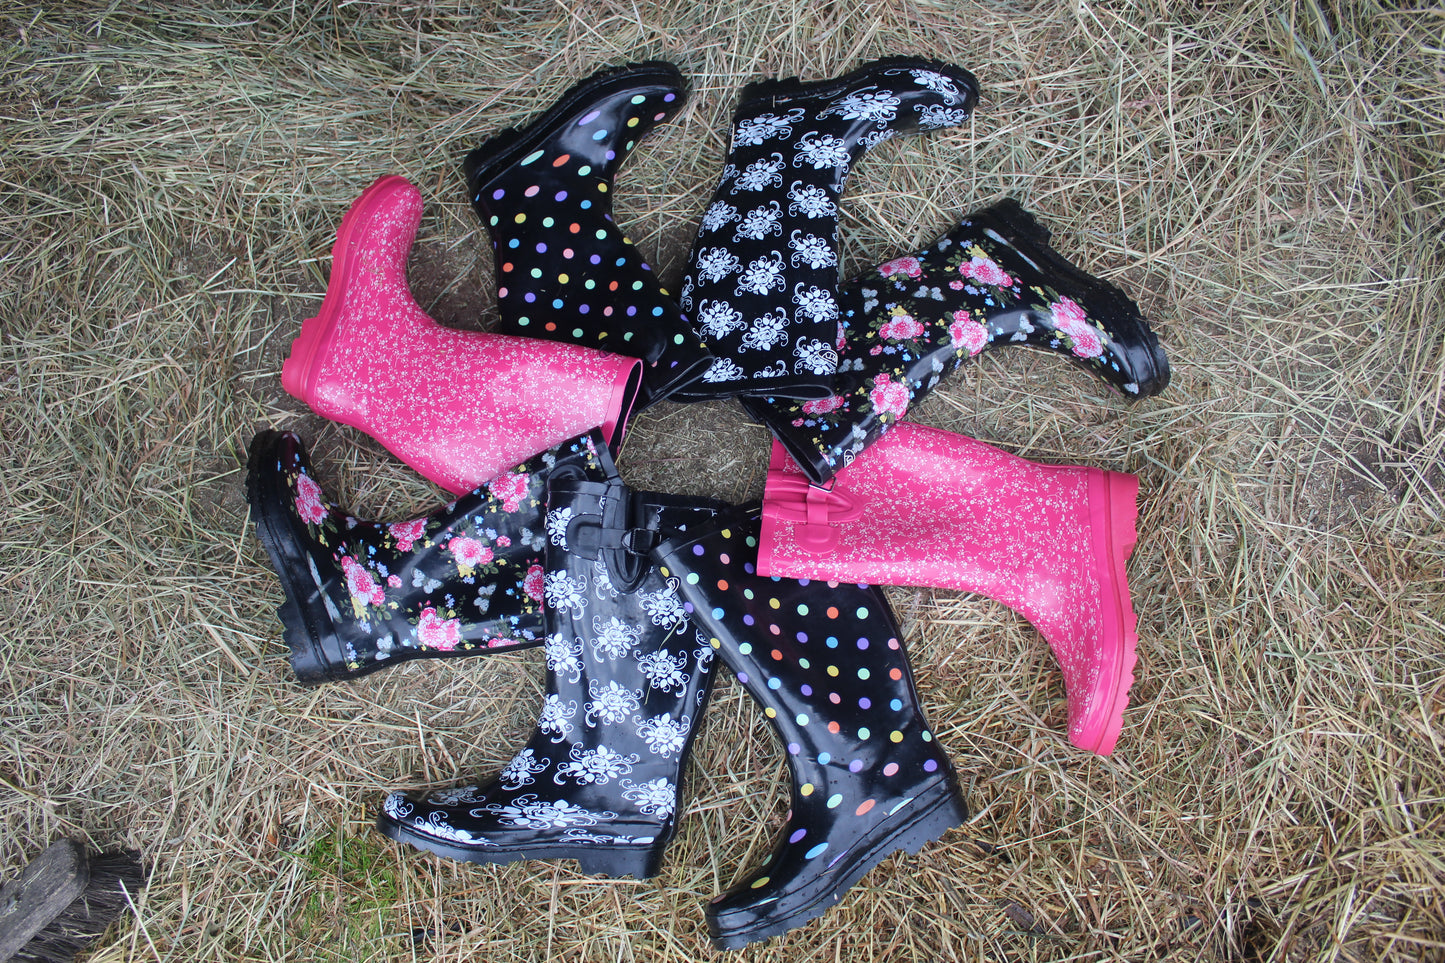 Womens Adjustable Calf Wellies Waterproof Ladies Fashion Festival Dog Walking Rain Mud Wellington Boots